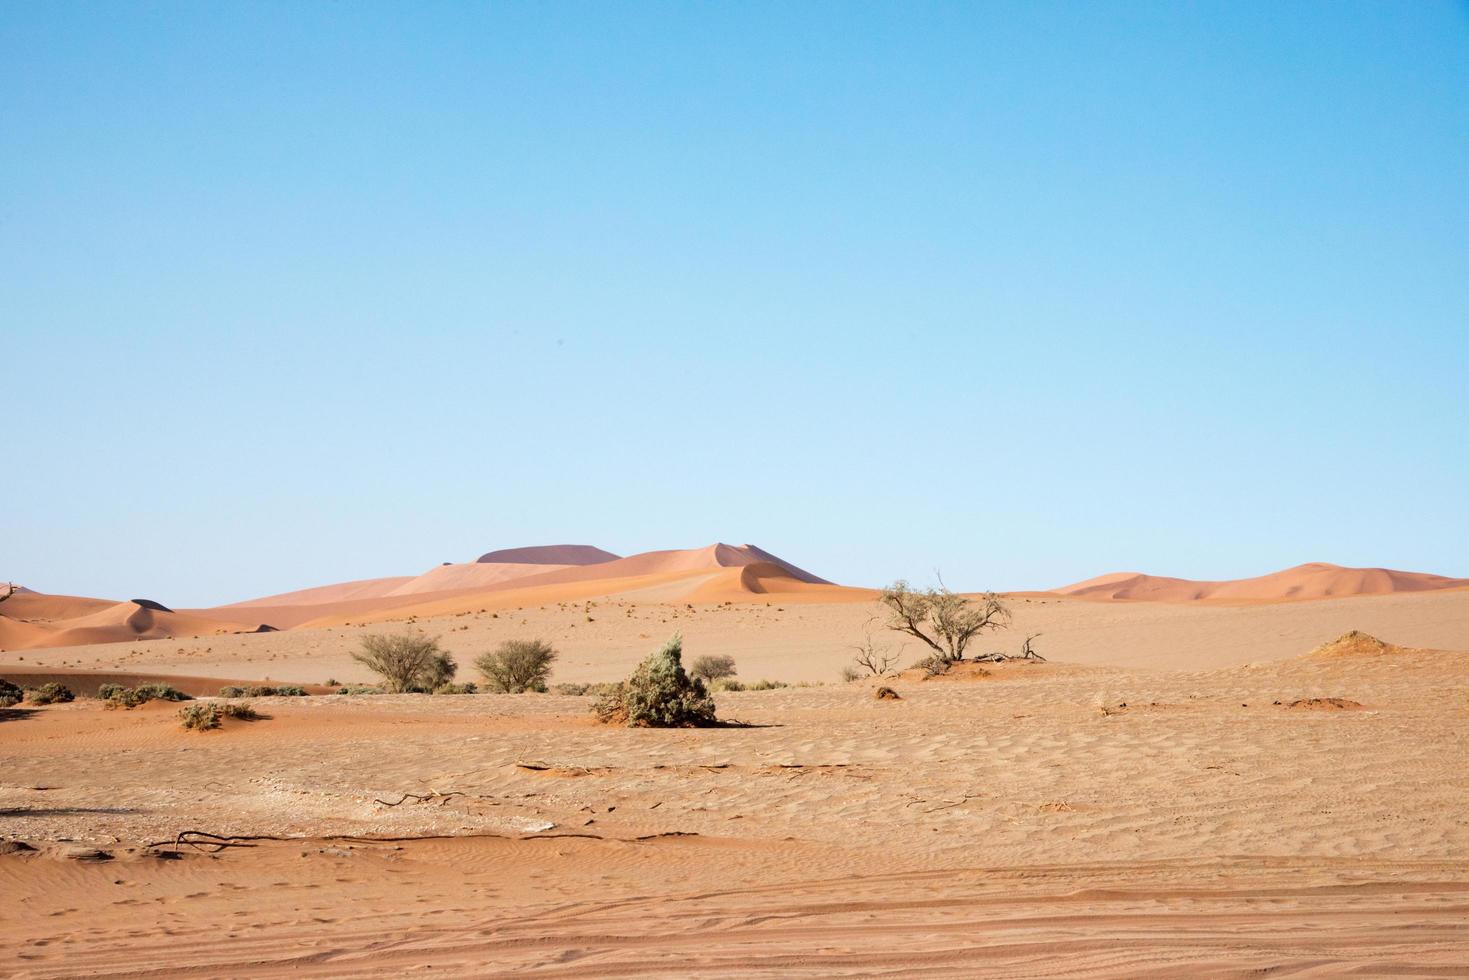 Arid landscape in Namib desert. Blue sky, no people. Namibia photo